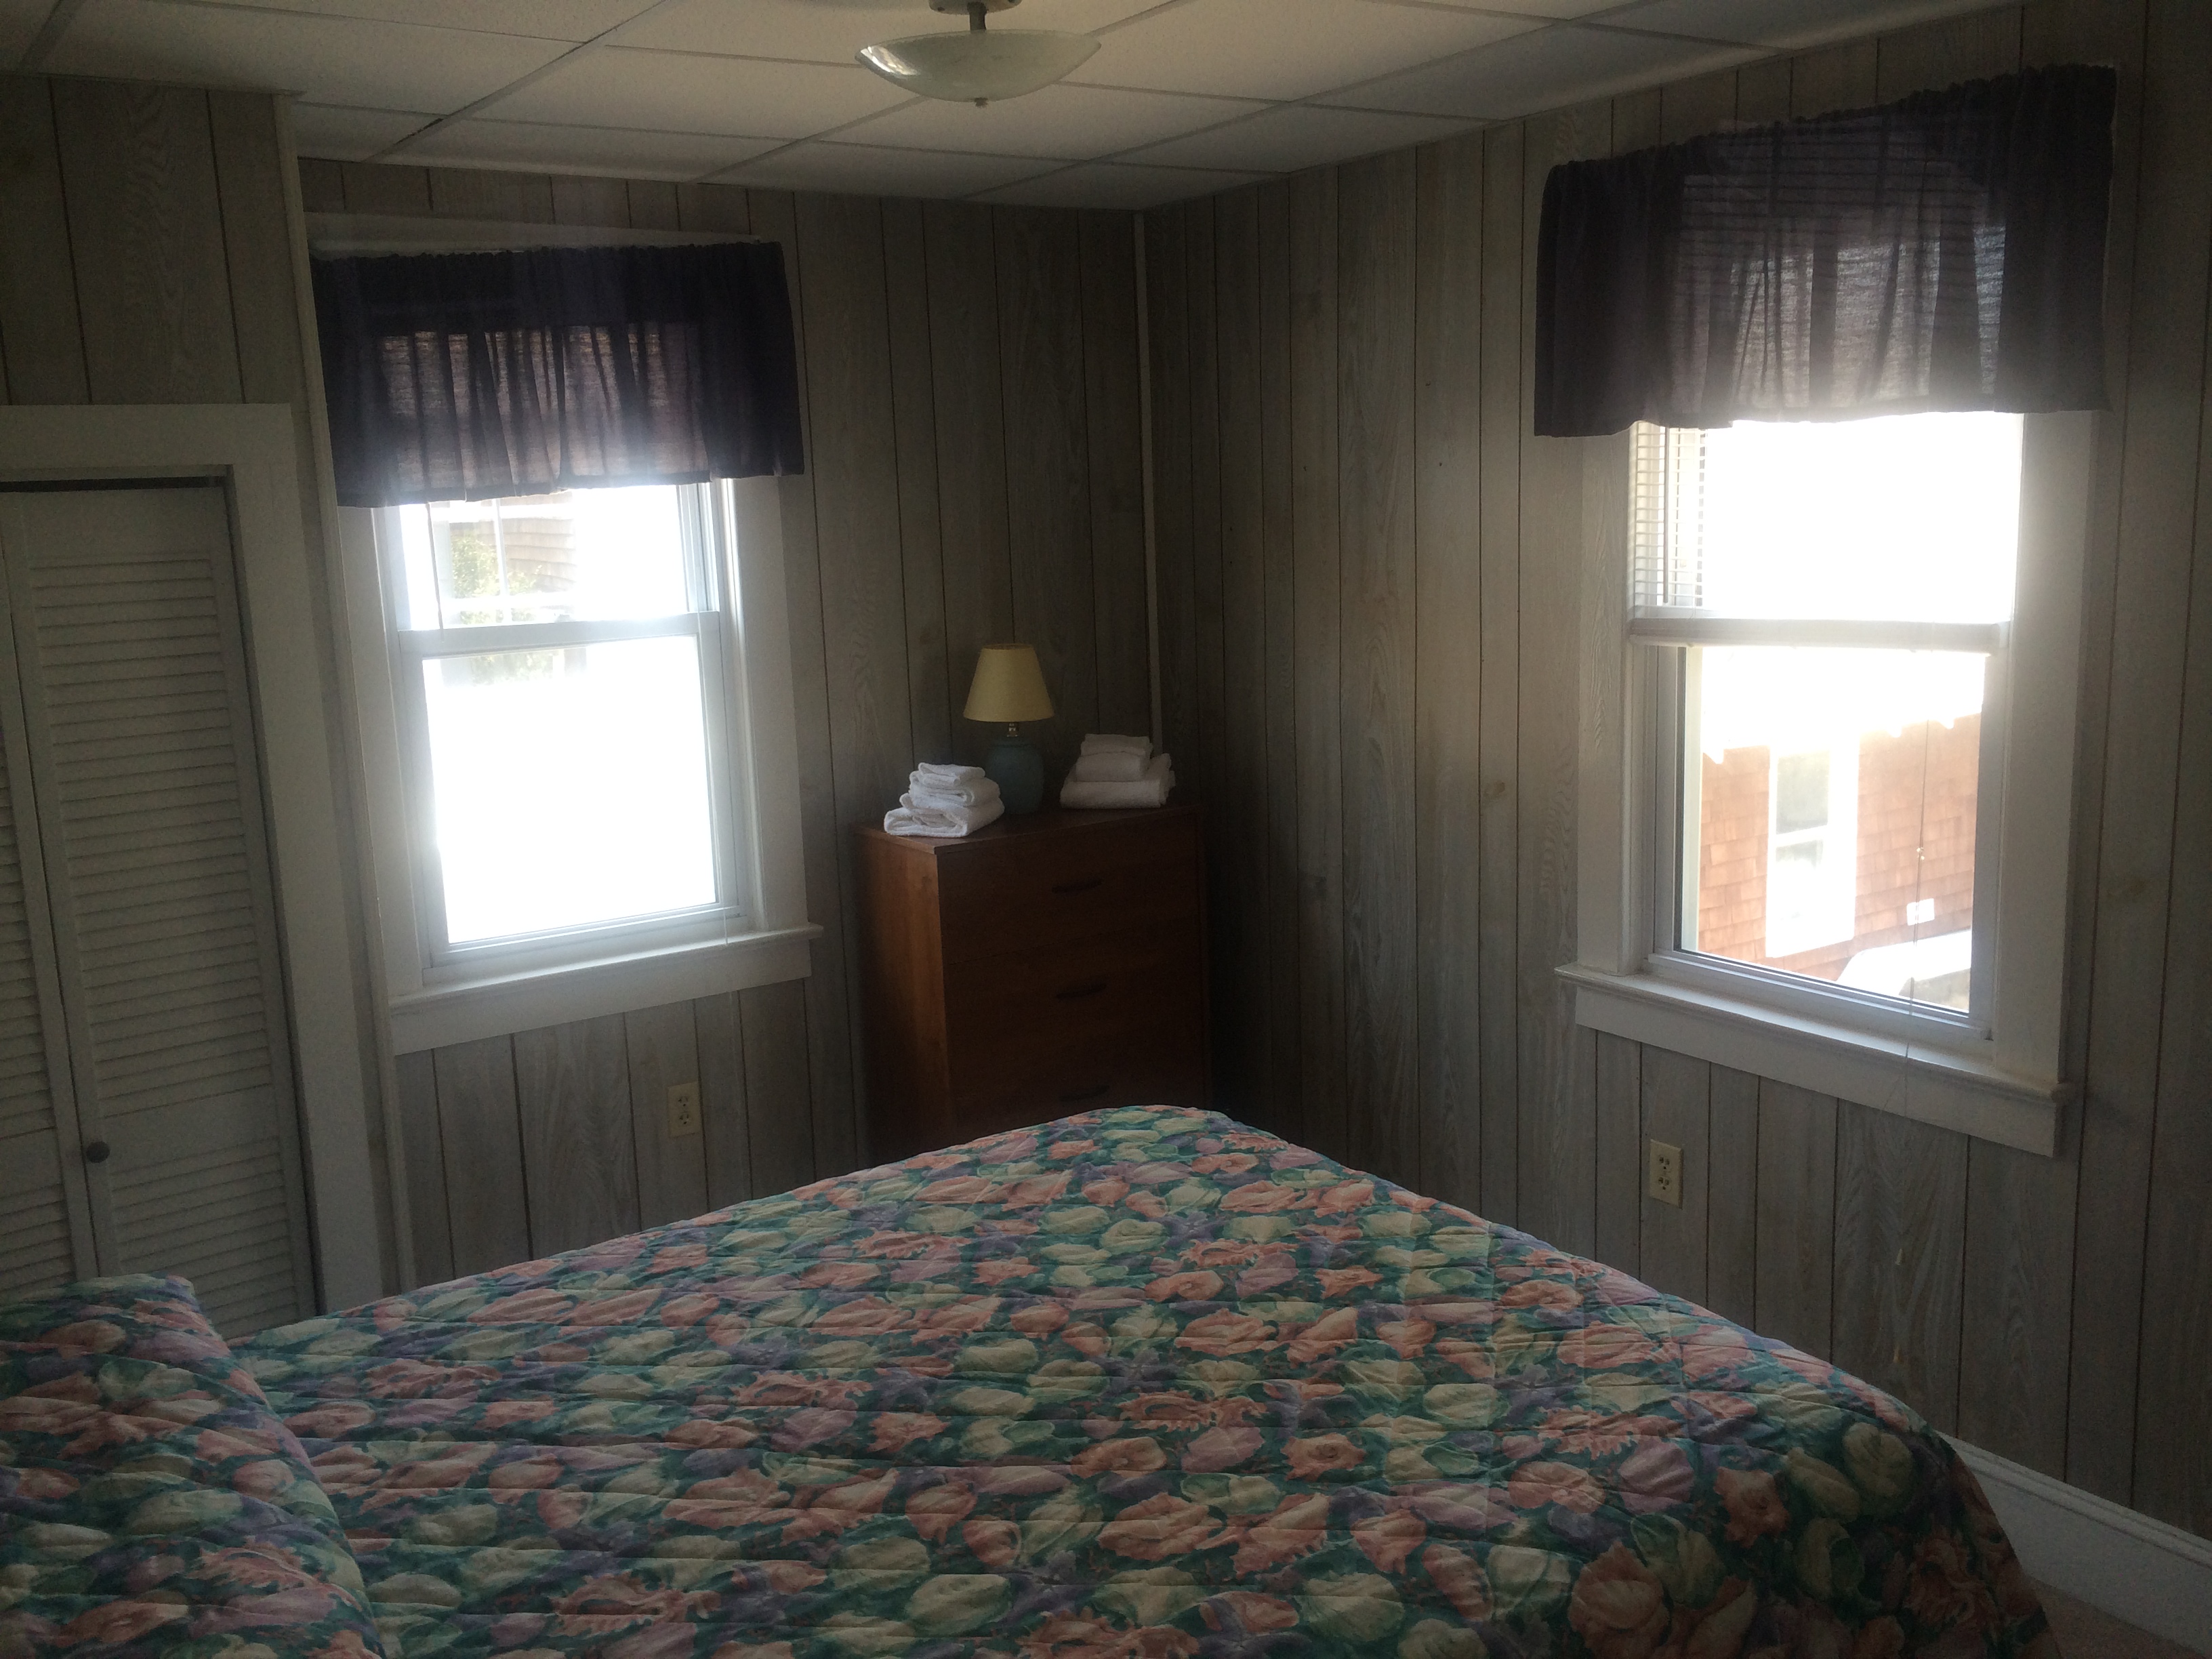 queen bed in bedroom with dresser, closet and windows